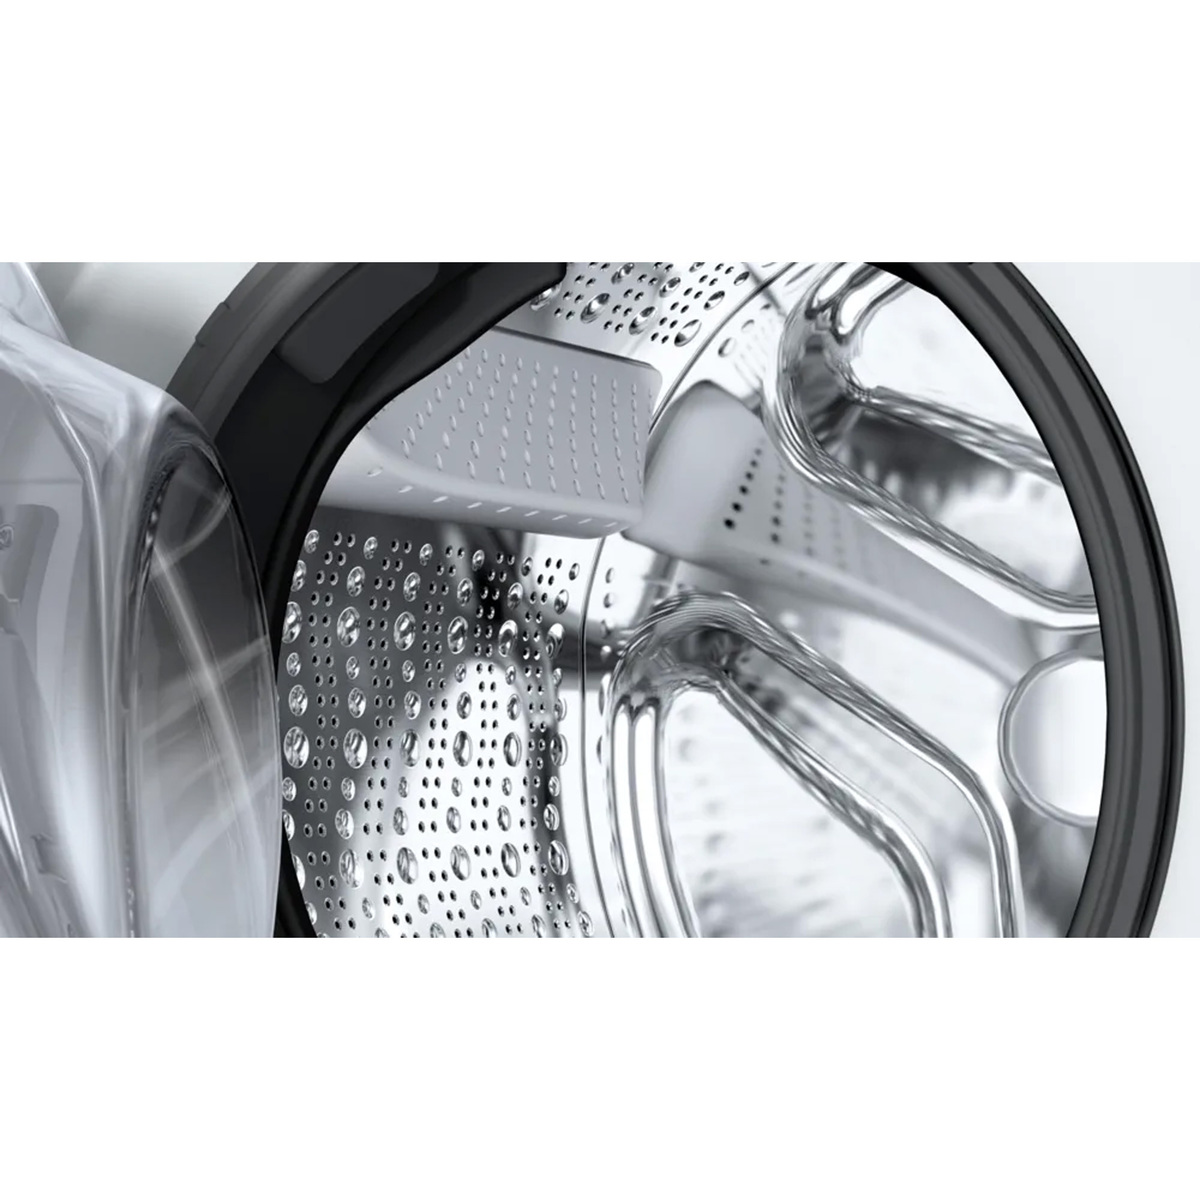 Bosch Series 4 Front Load Washing Machine, 8 kg, 1400 RPM, White, WAN28282GC